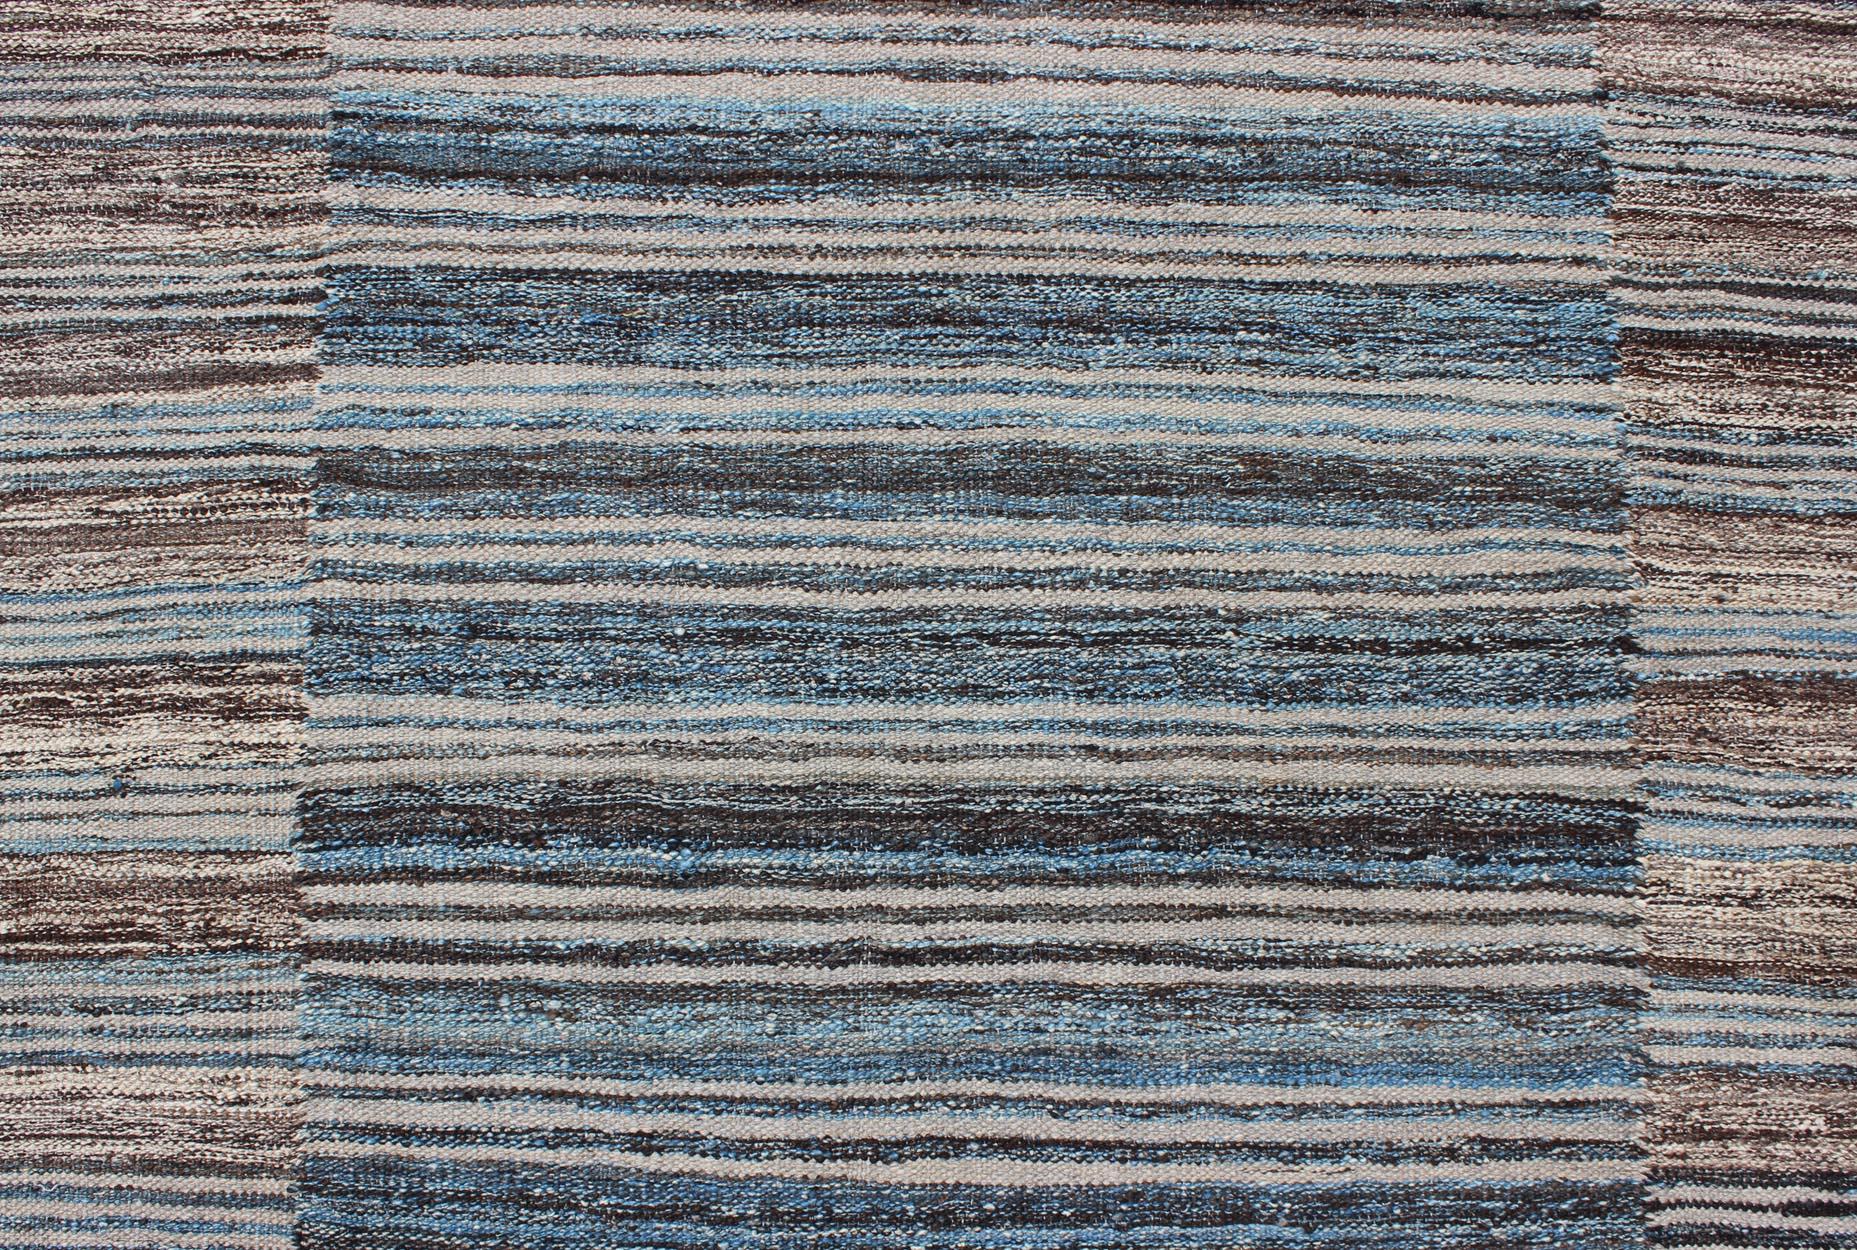 Flat-Weave Kilim Rug with Classic Stripe Design in Blue, Cream, Brown 1